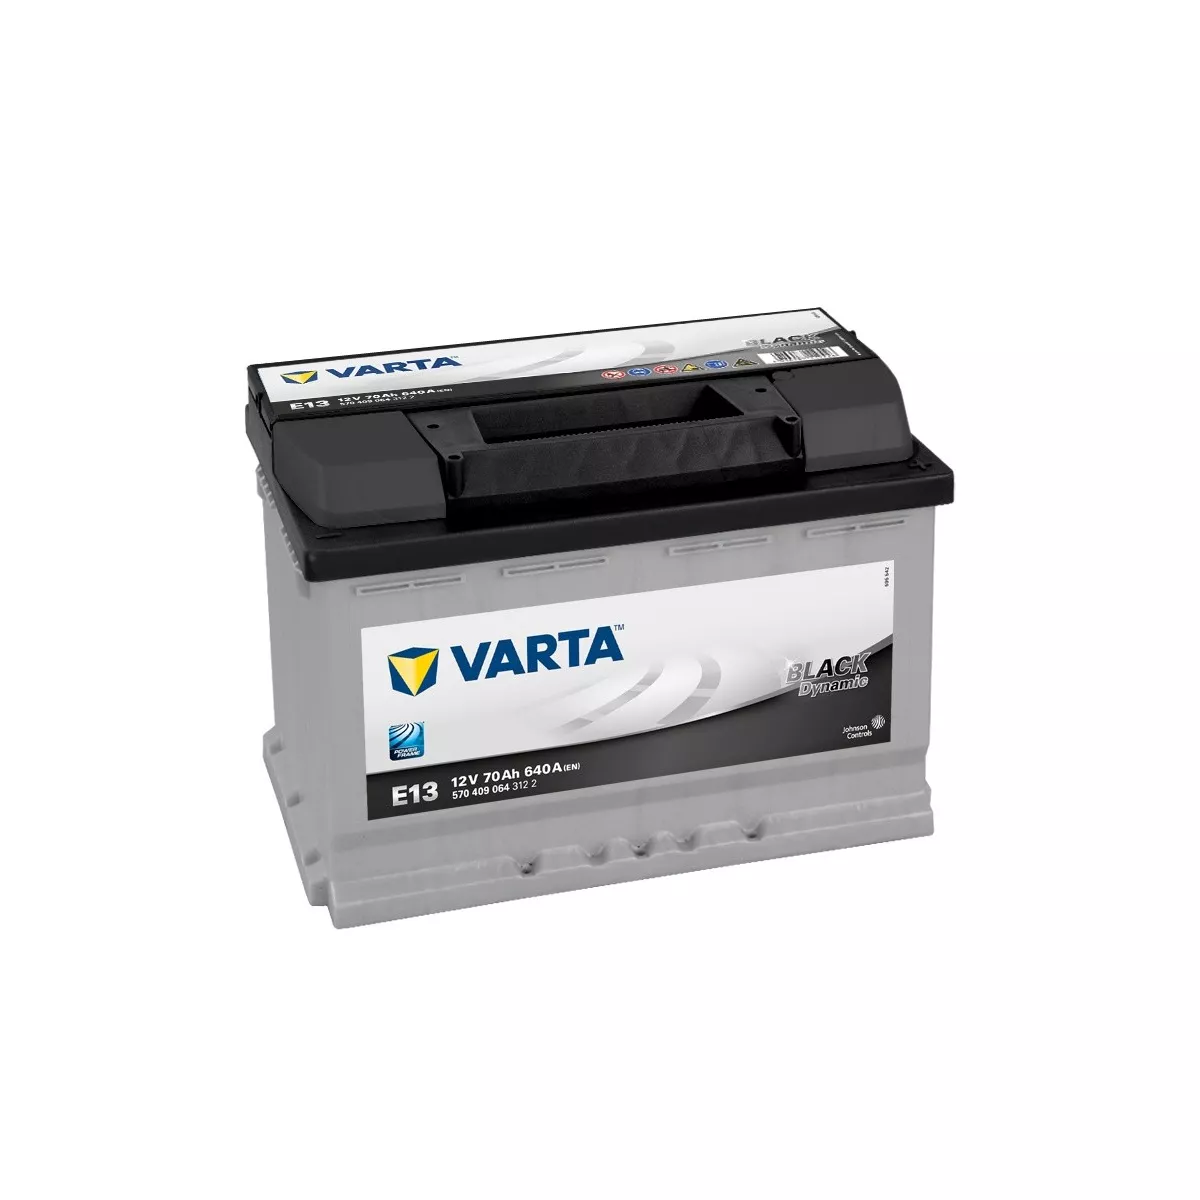 BATTERIE VARTA BLACK DYNAMIC E13 12V 70AH 640A - Batteries Auto, Voitures,  4x4, Véhicules Start & Stop Auto - BatterySet